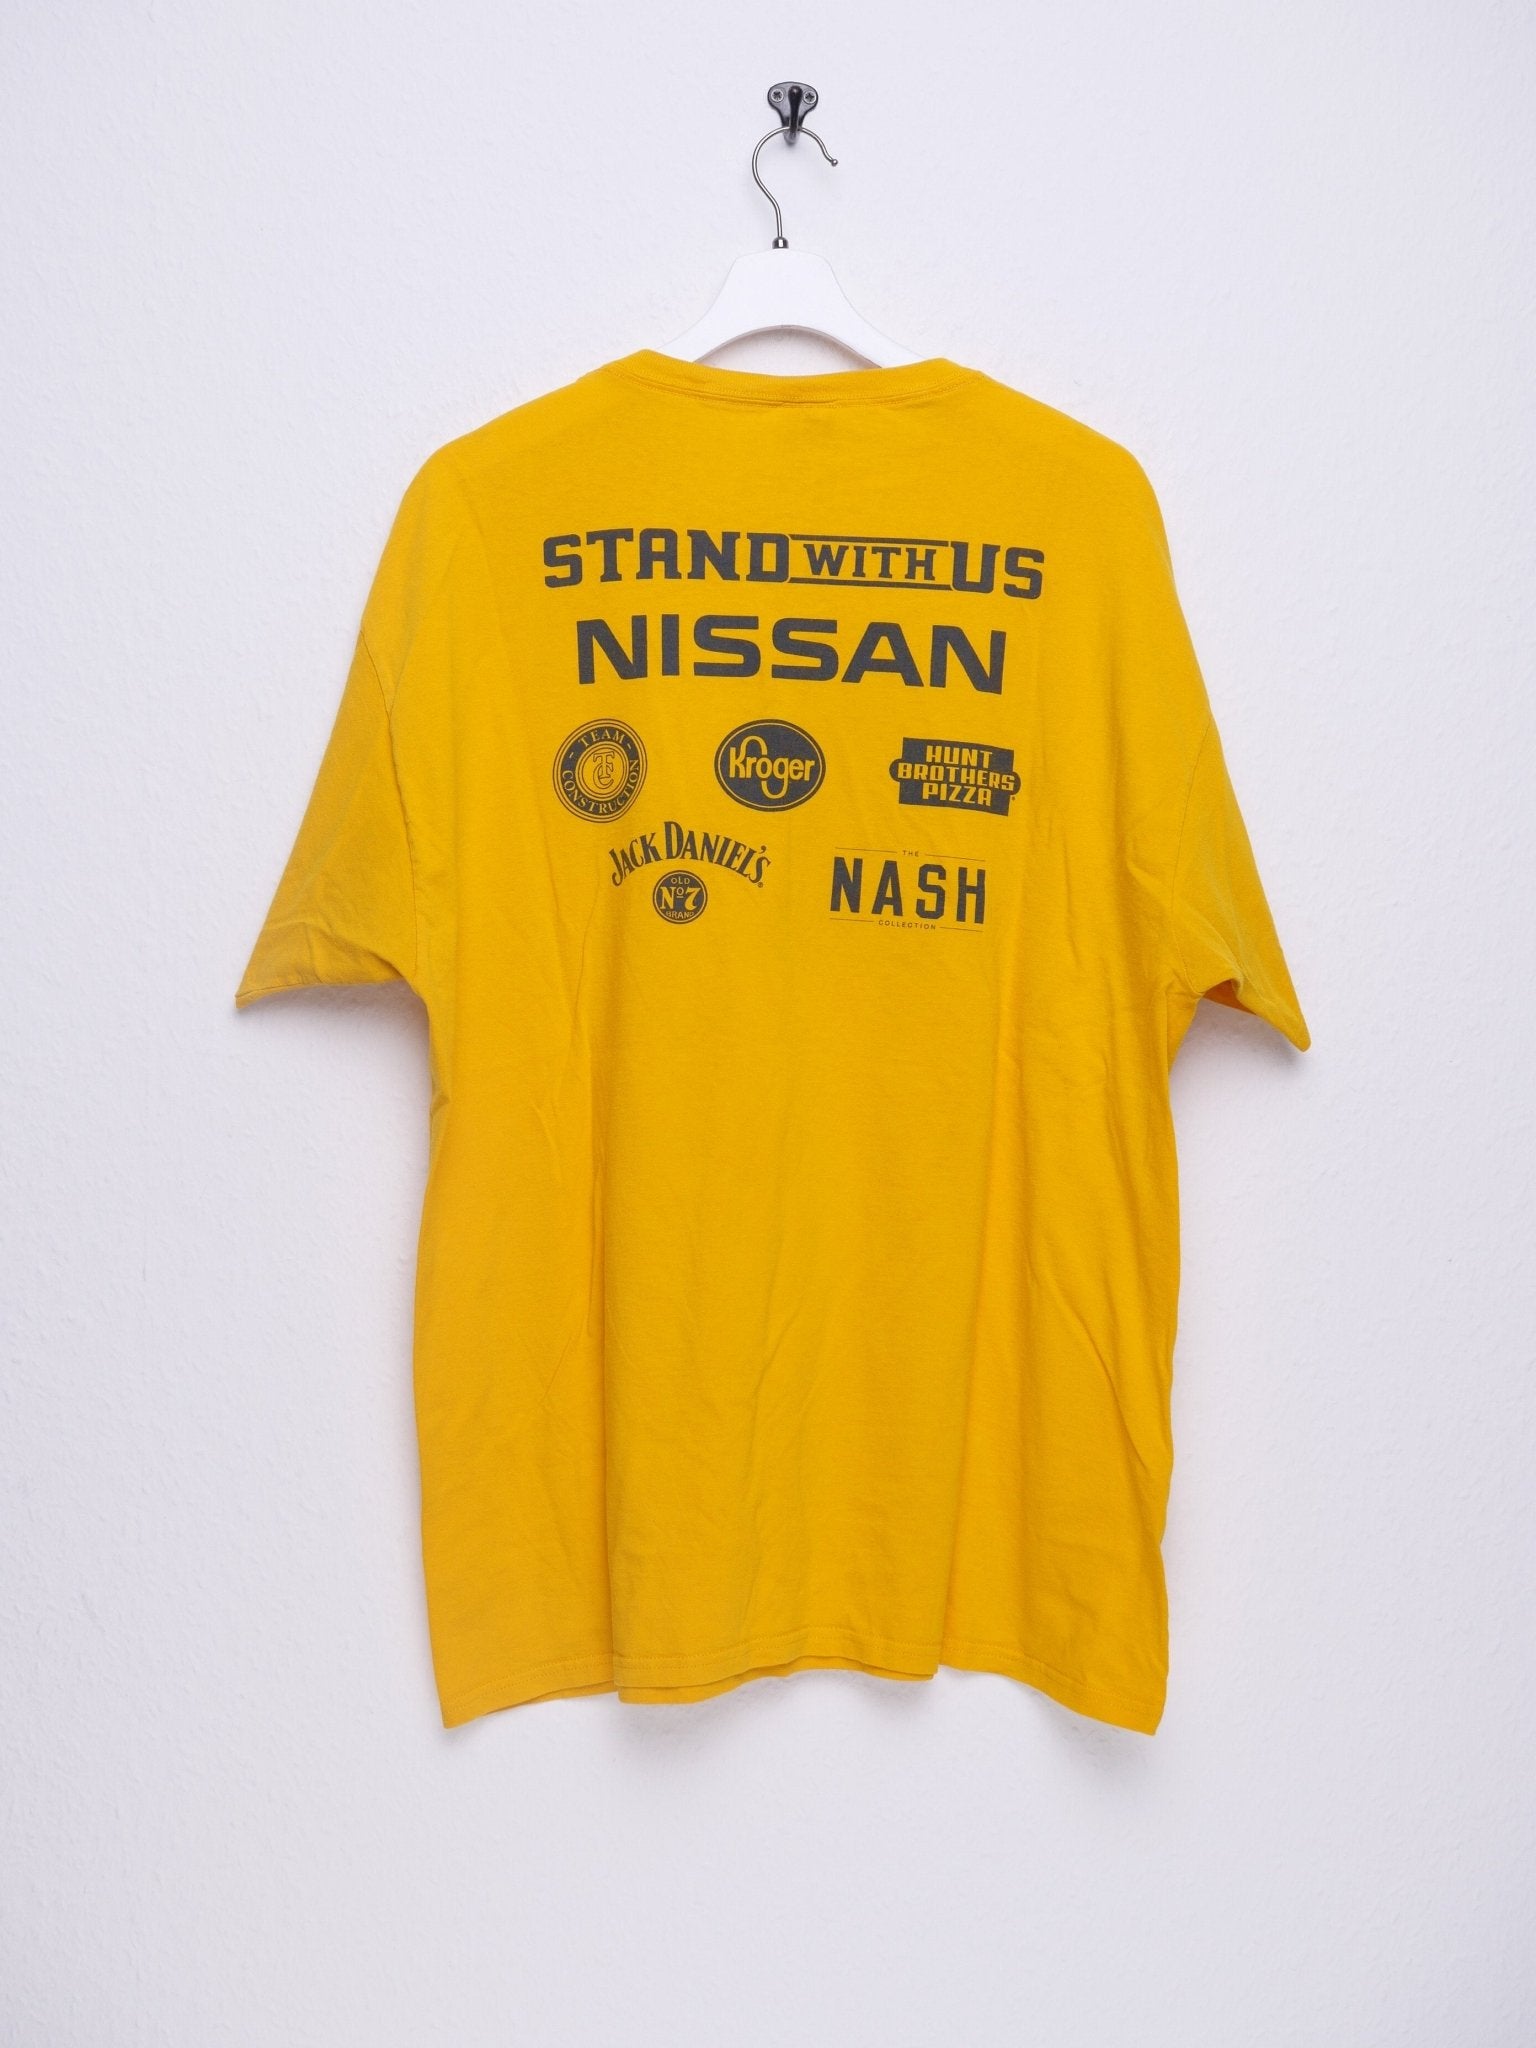 sport playoff loud printed yellow Shirt - Peeces